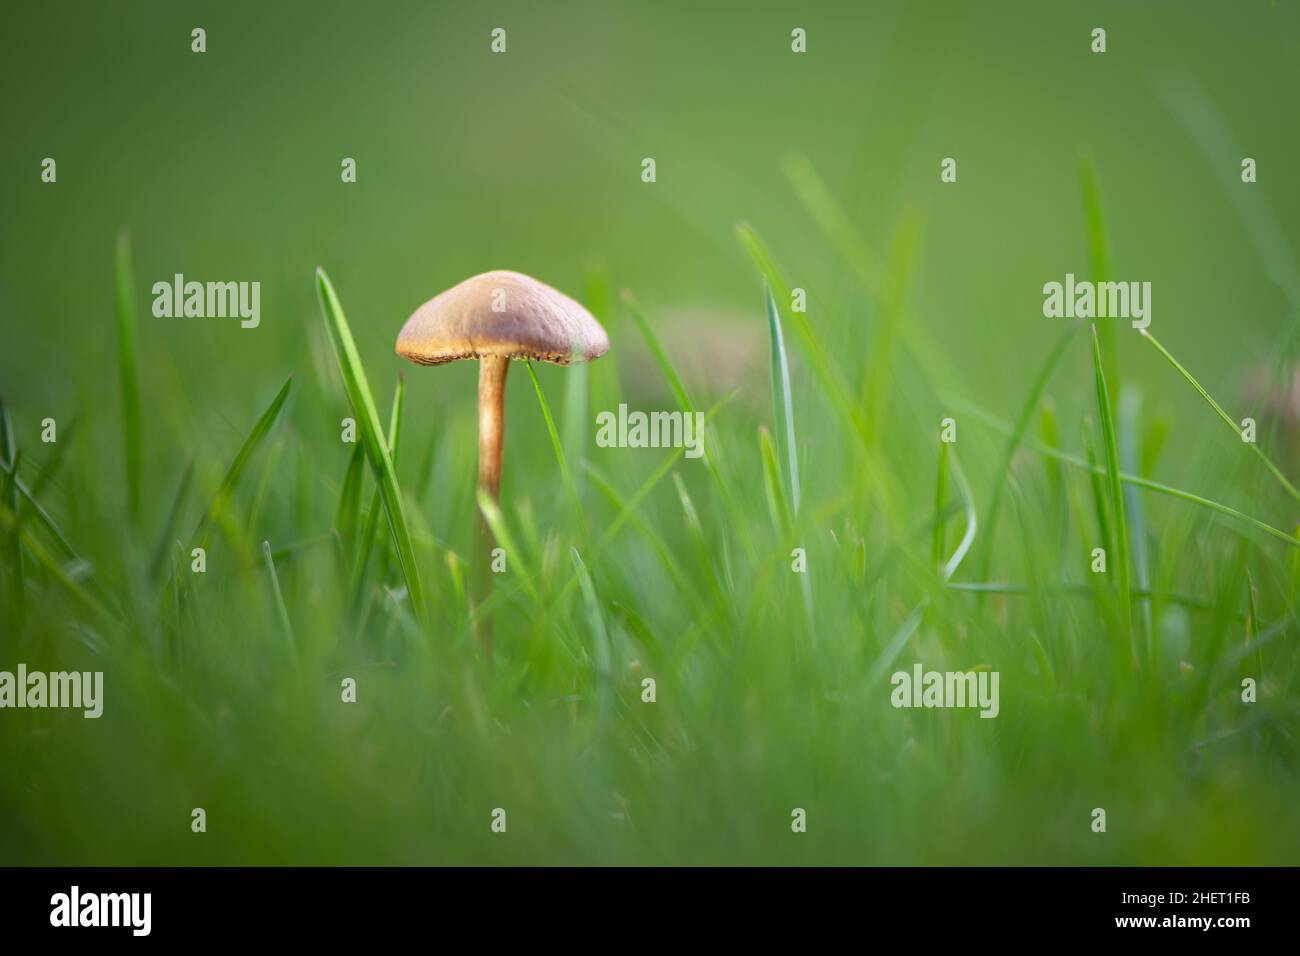 single marasmius oreades mushroom in soft light at green garden Stock Photo